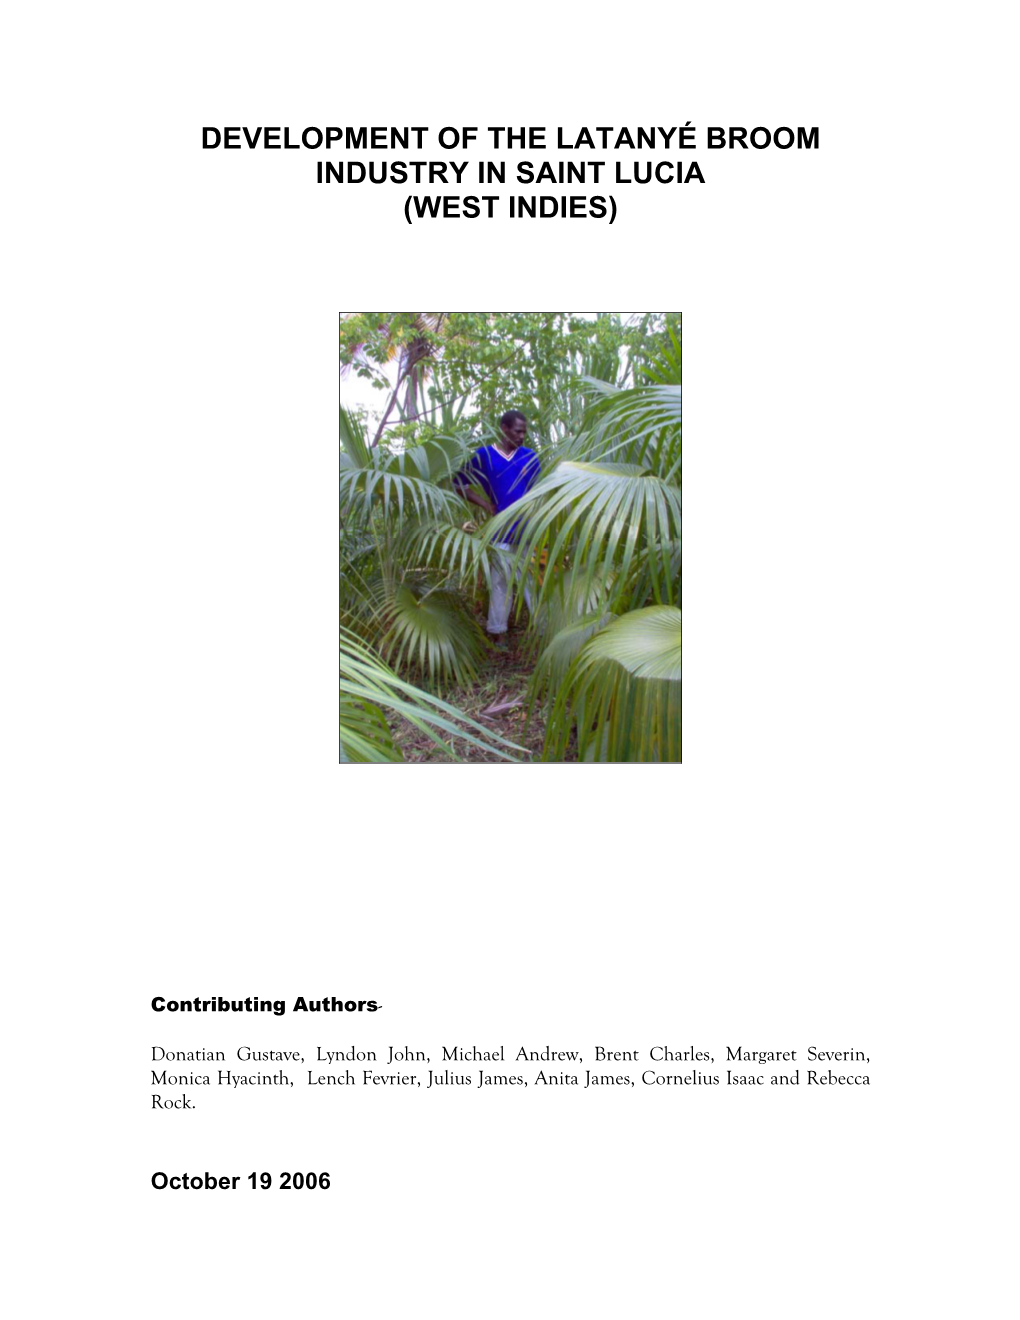 Case Study on Latanye Broom Industry